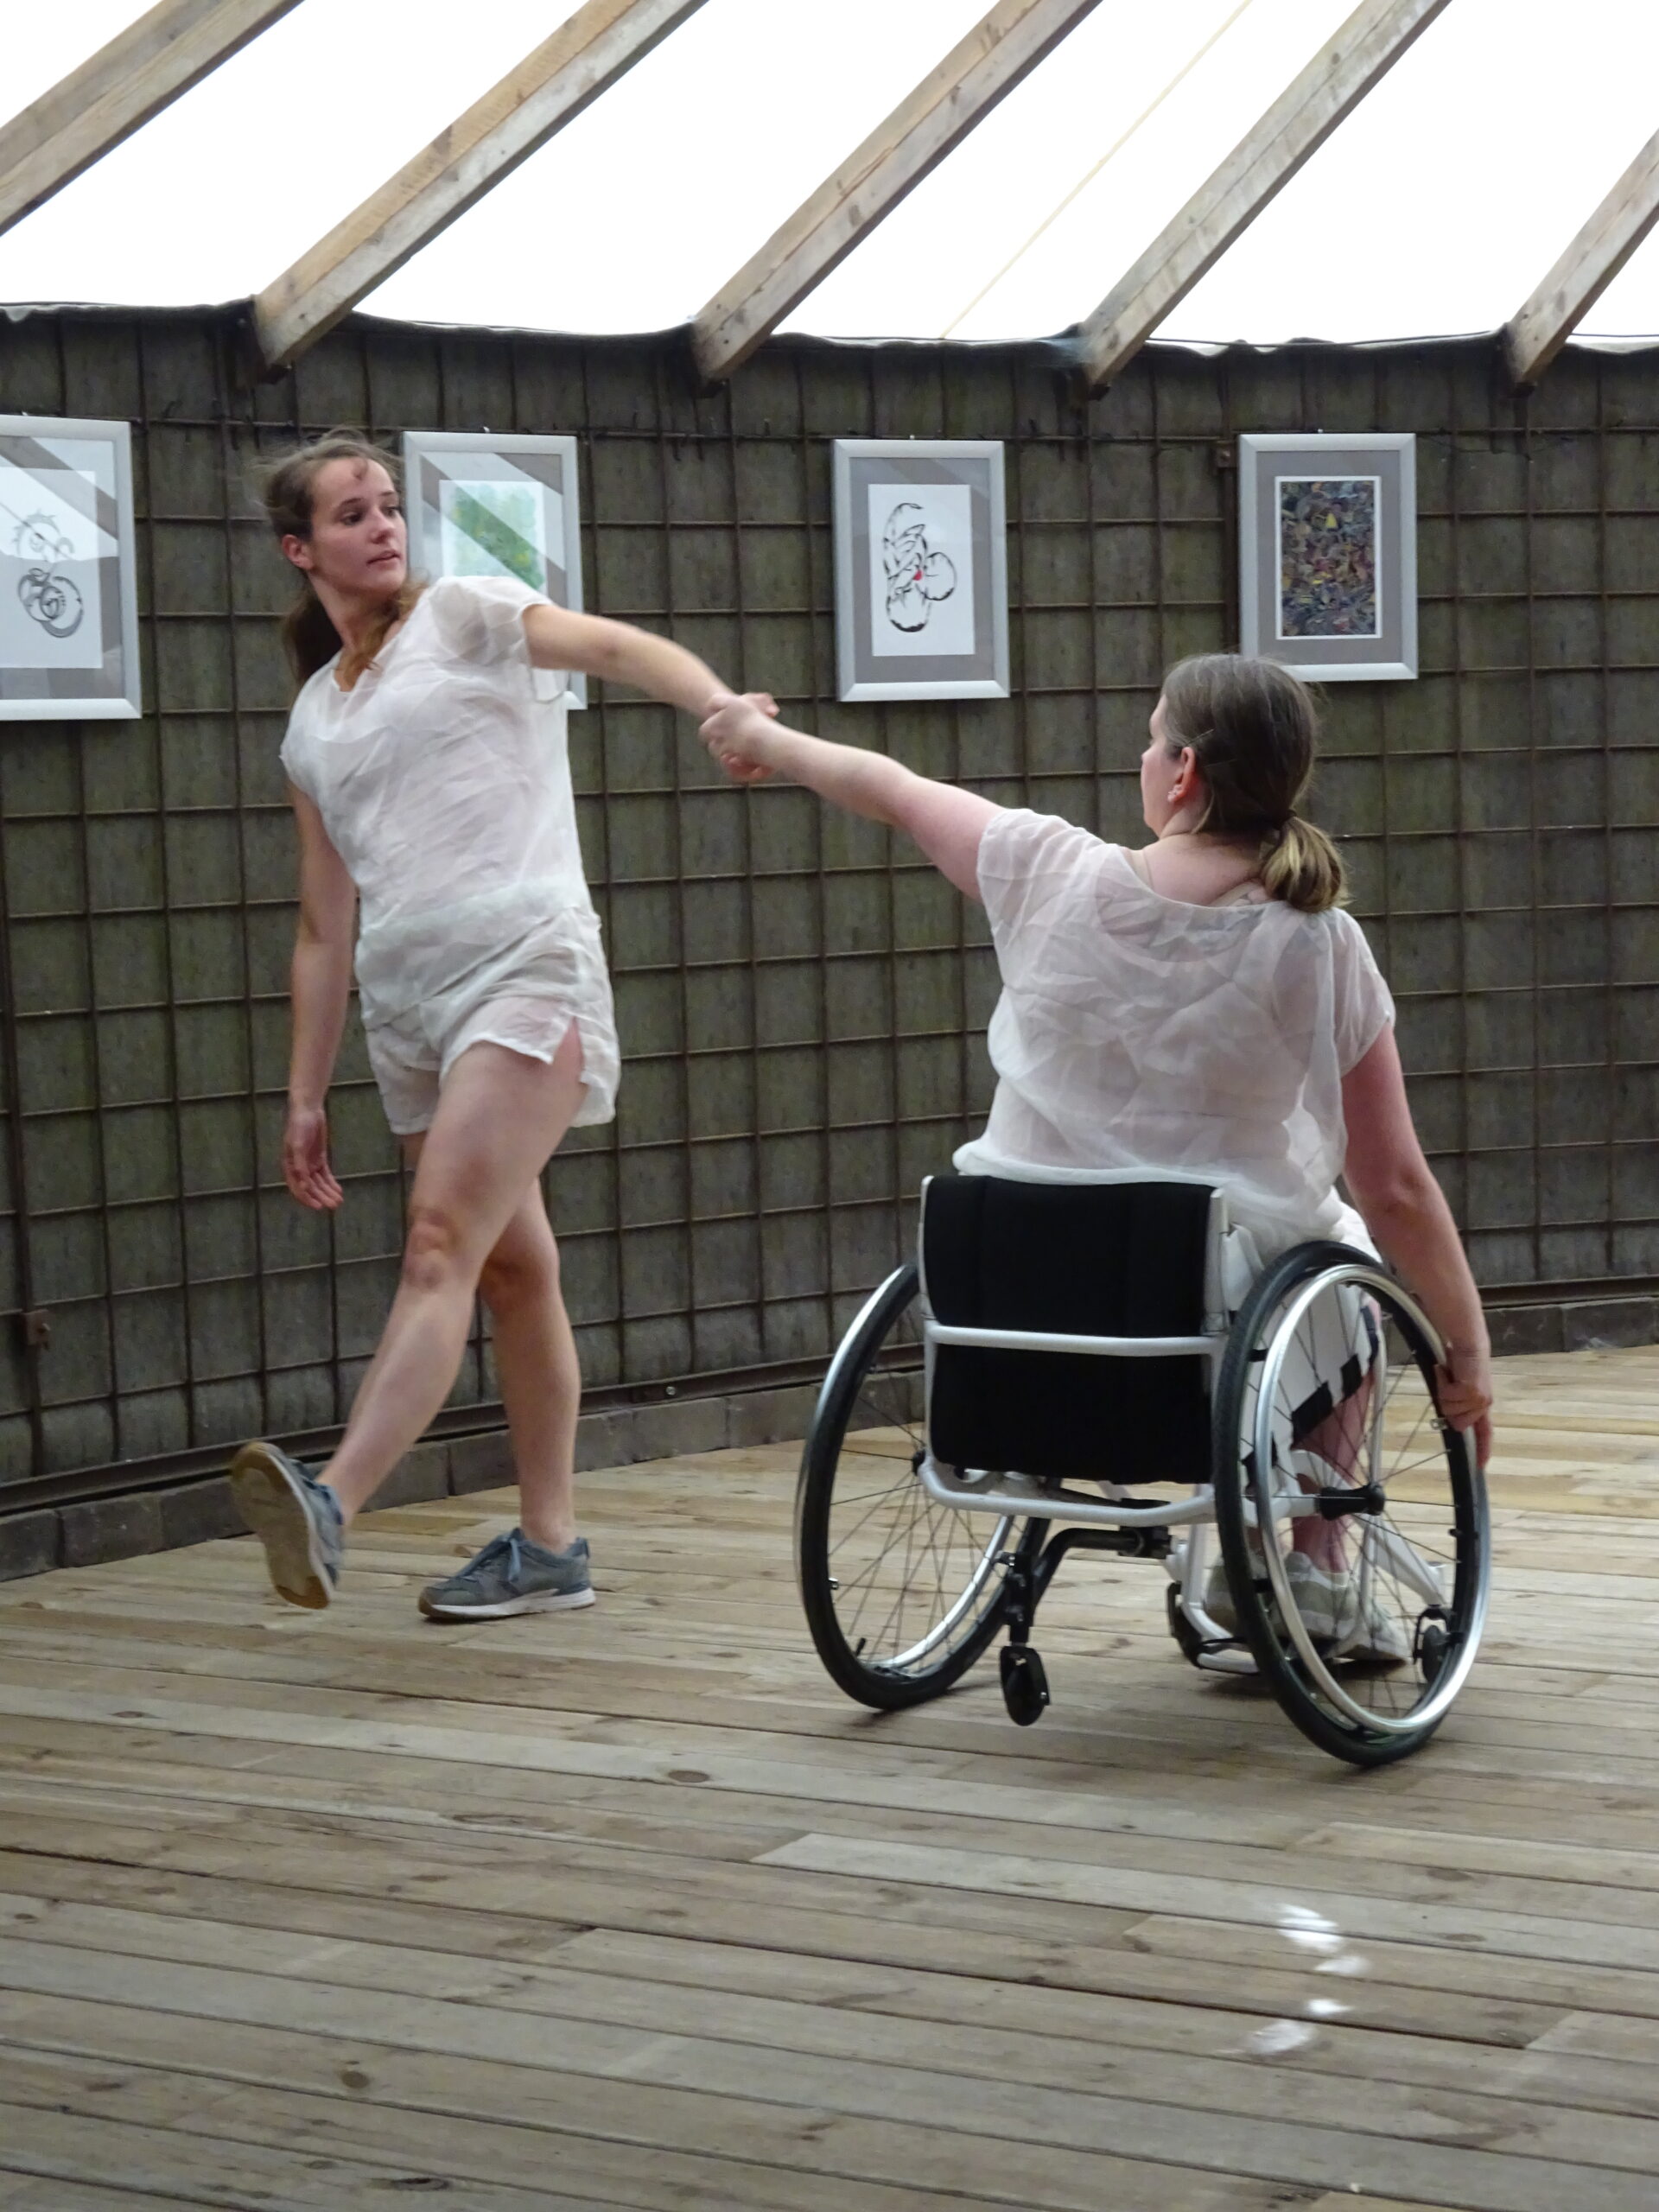 Dansers van Misiconi Company Jacqueline van Kuilenberg en Suzanne Lamers dansen het stuk #Storyteller